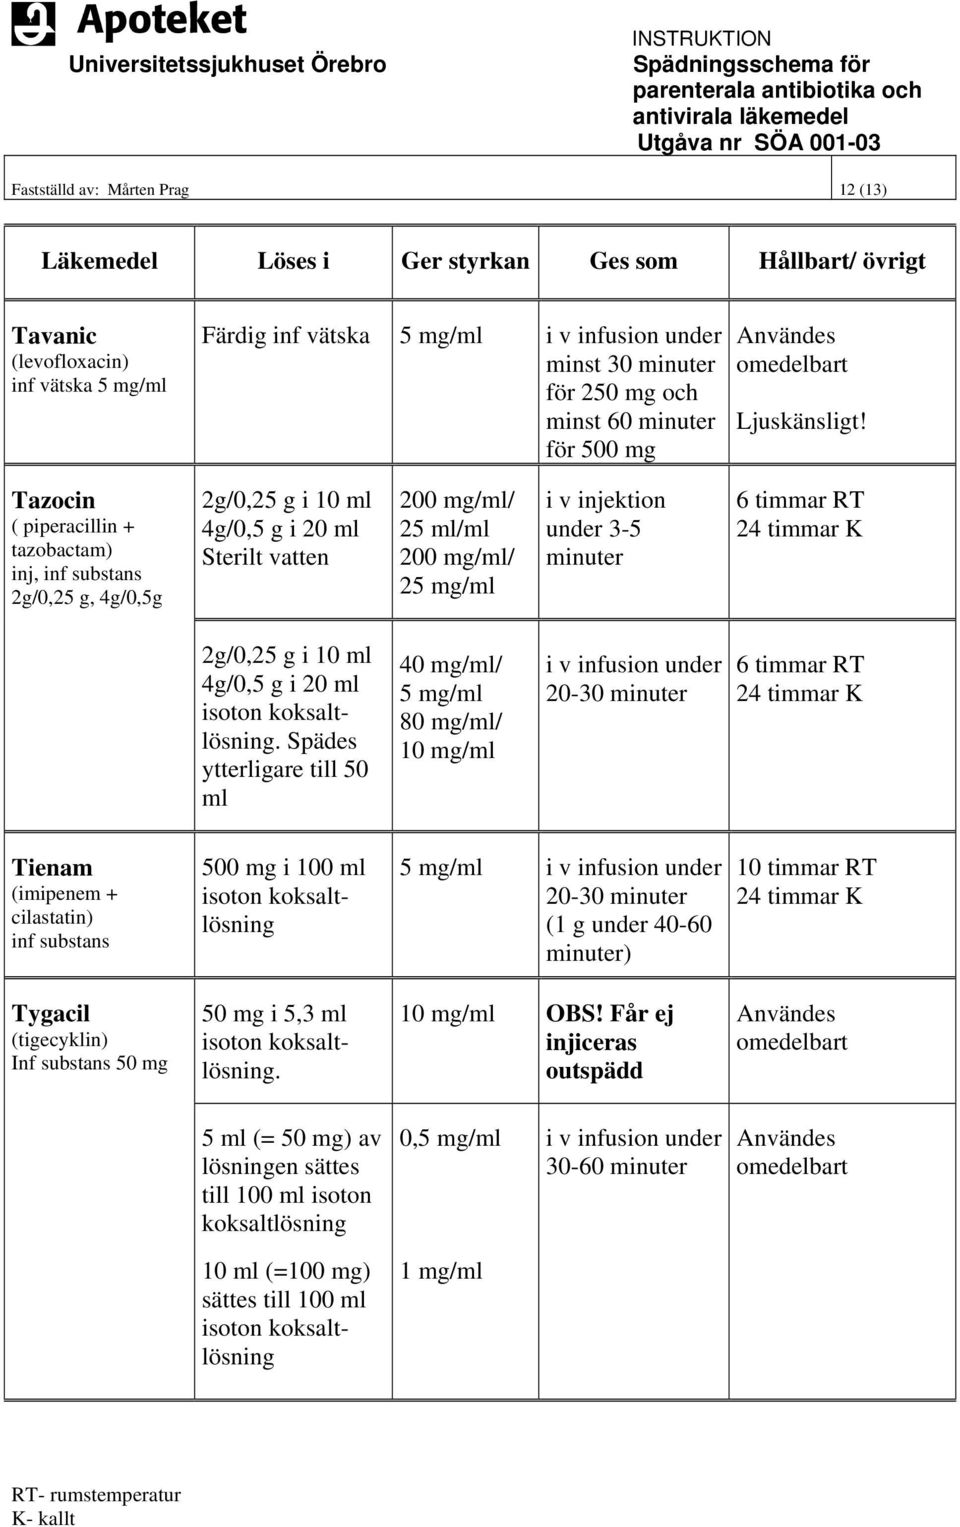 Tazocin ( piperacillin + tazobactam) inj, inf substans 2g/0,25 g, 4g/0,5g 2g/0,25 g i 10 ml 4g/0,5 g i 20 ml Sterilt 200 mg/ml/ 25 ml/ml 200 mg/ml/ 25 mg/ml i v injektion under 3-5 uter 6 timmar RT